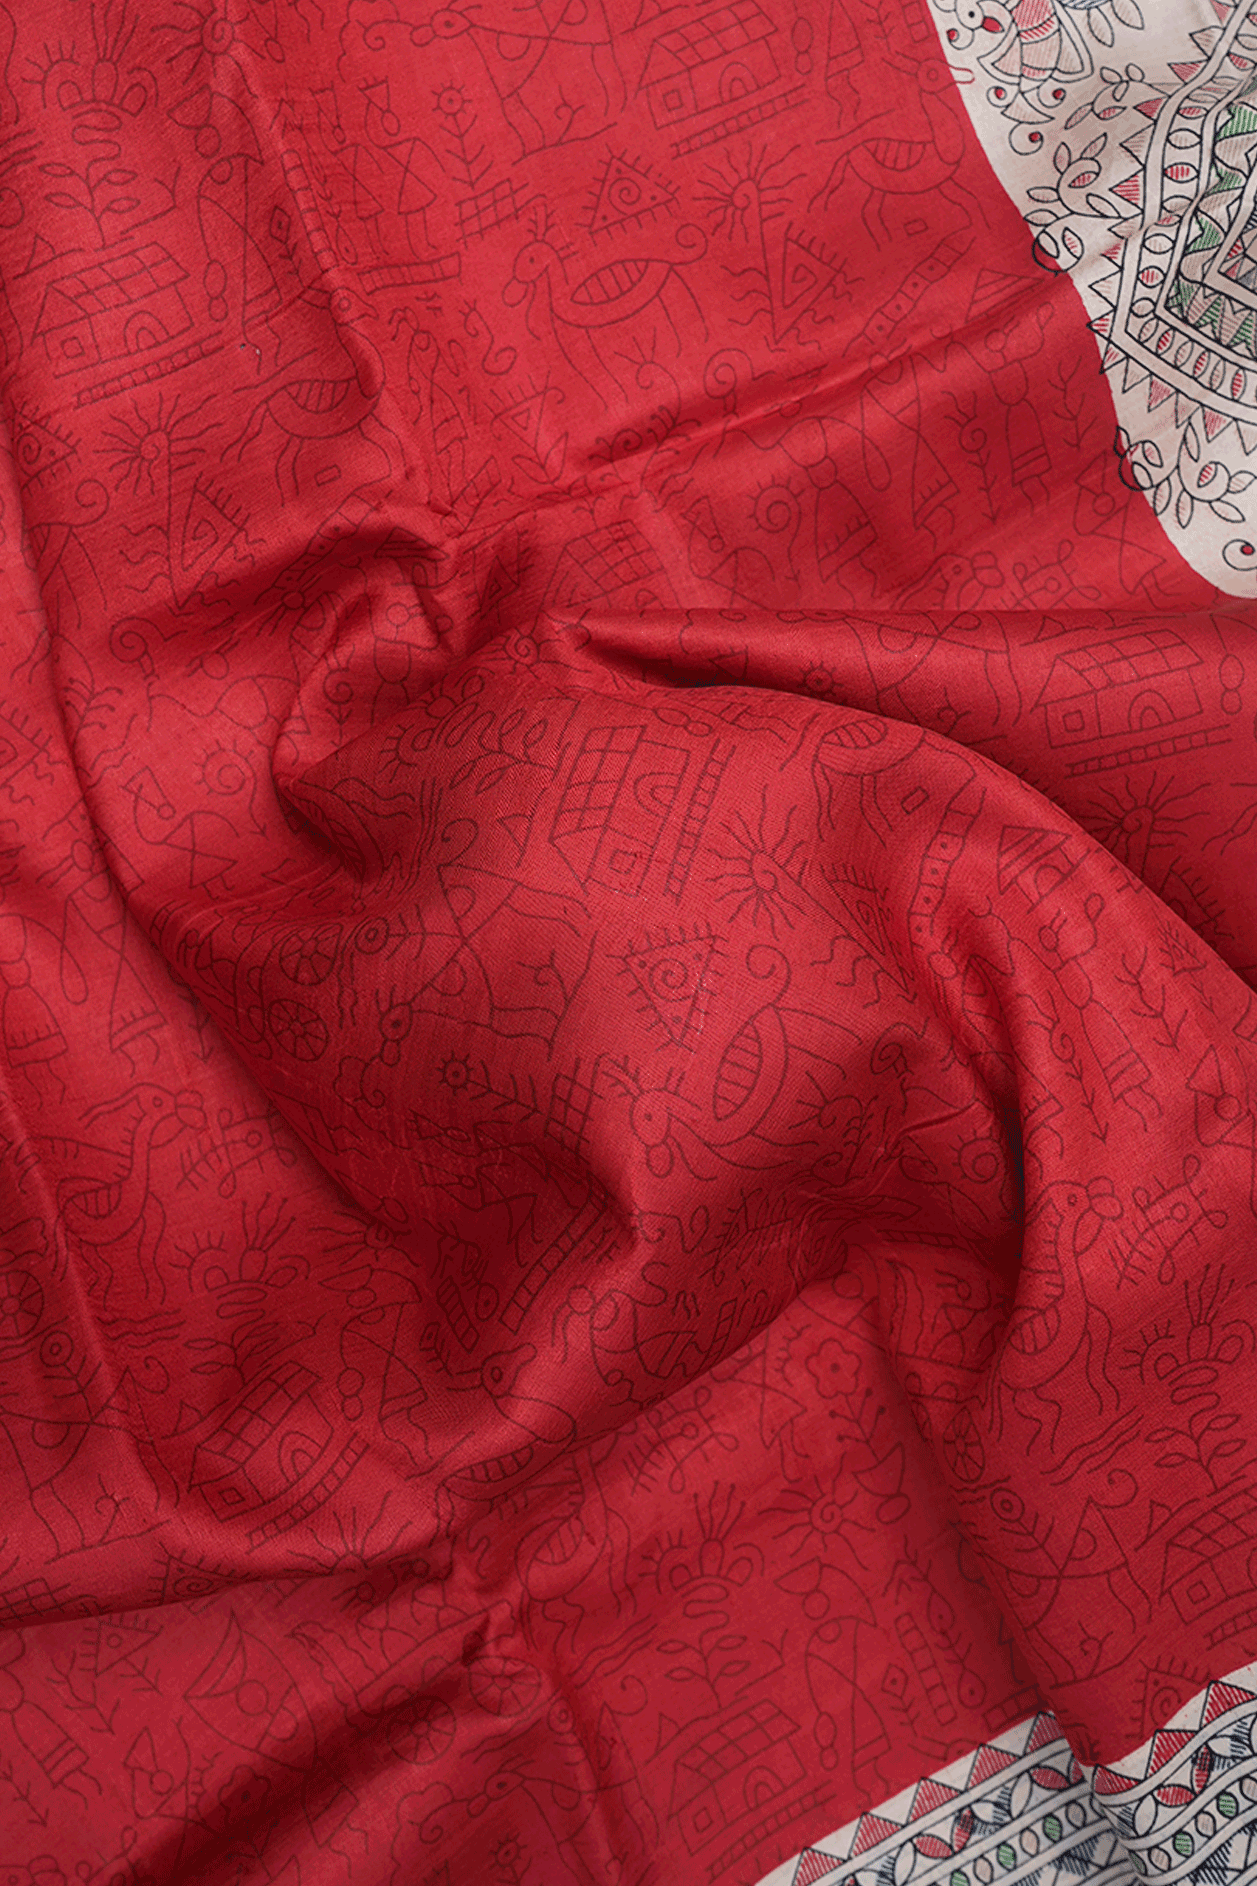 Madhubani Design Border Scarlet Red Printed Silk Saree